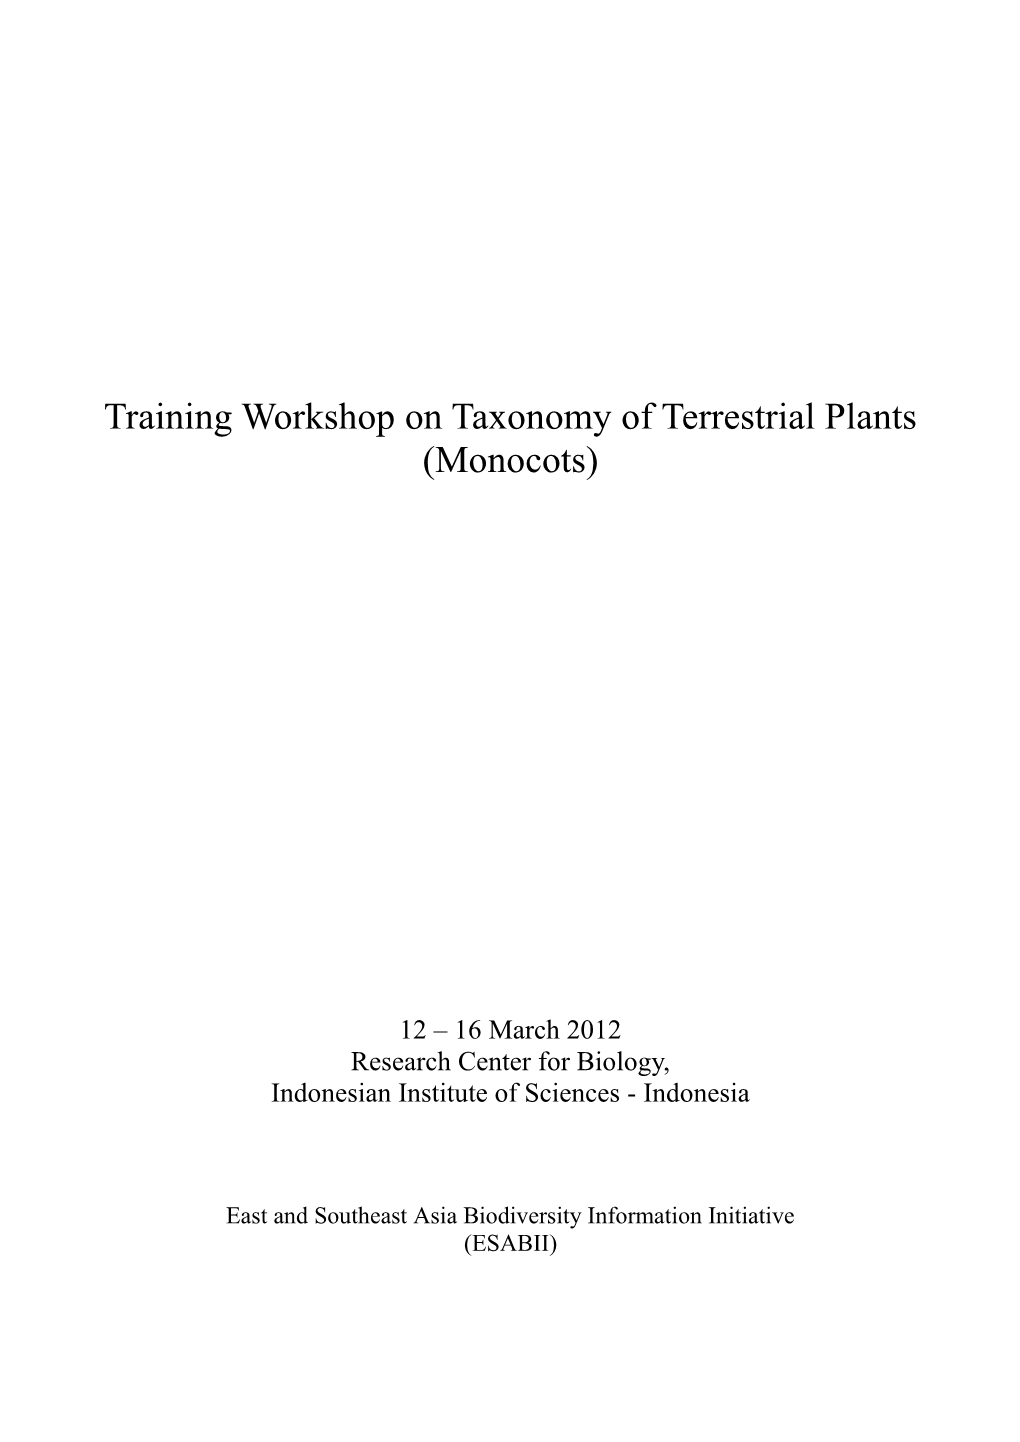 Training Workshop on Taxonomy of Terrestrial Plants (Monocots)